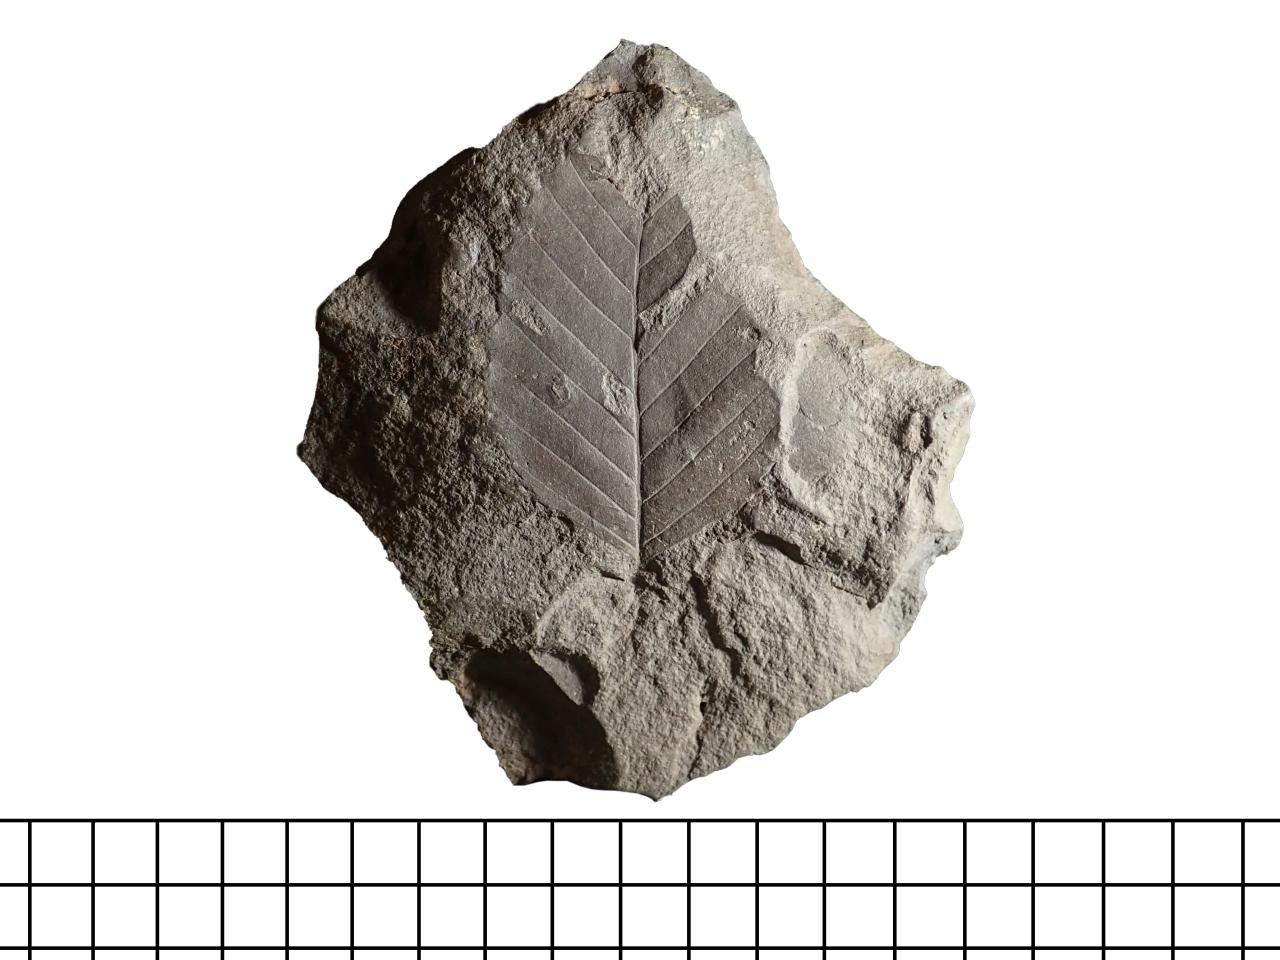 Detalle de hoja fósil de Nothofagus aff. alessandrii